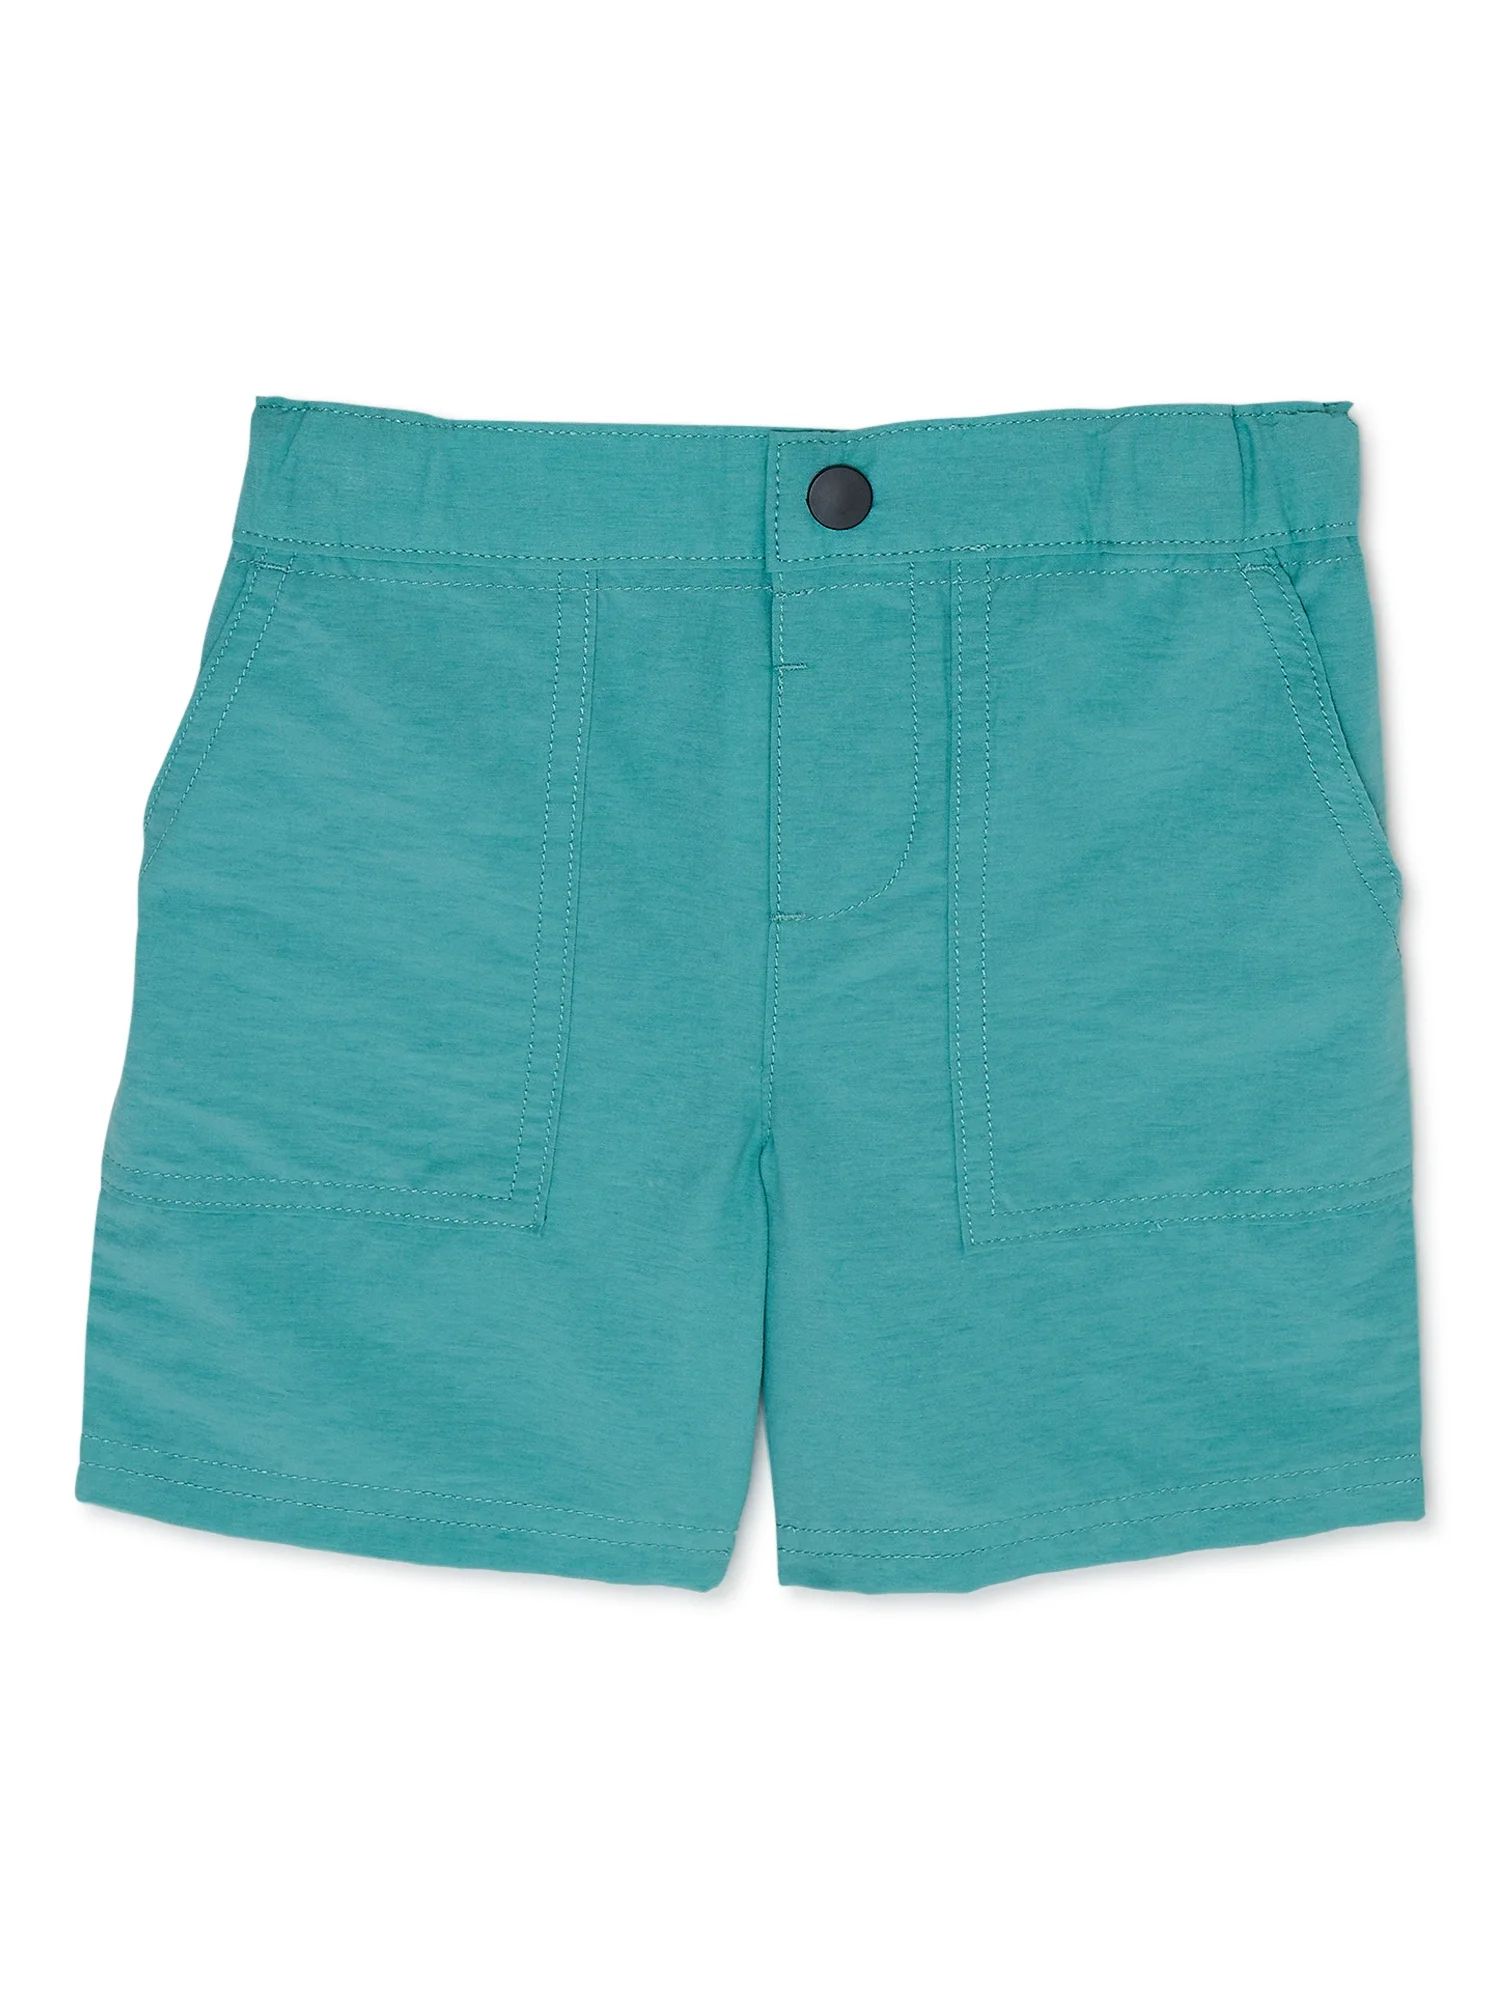 Garanimals Toddler Boy Tech Woven Shorts, Sizes 12M-5T | Walmart (US)